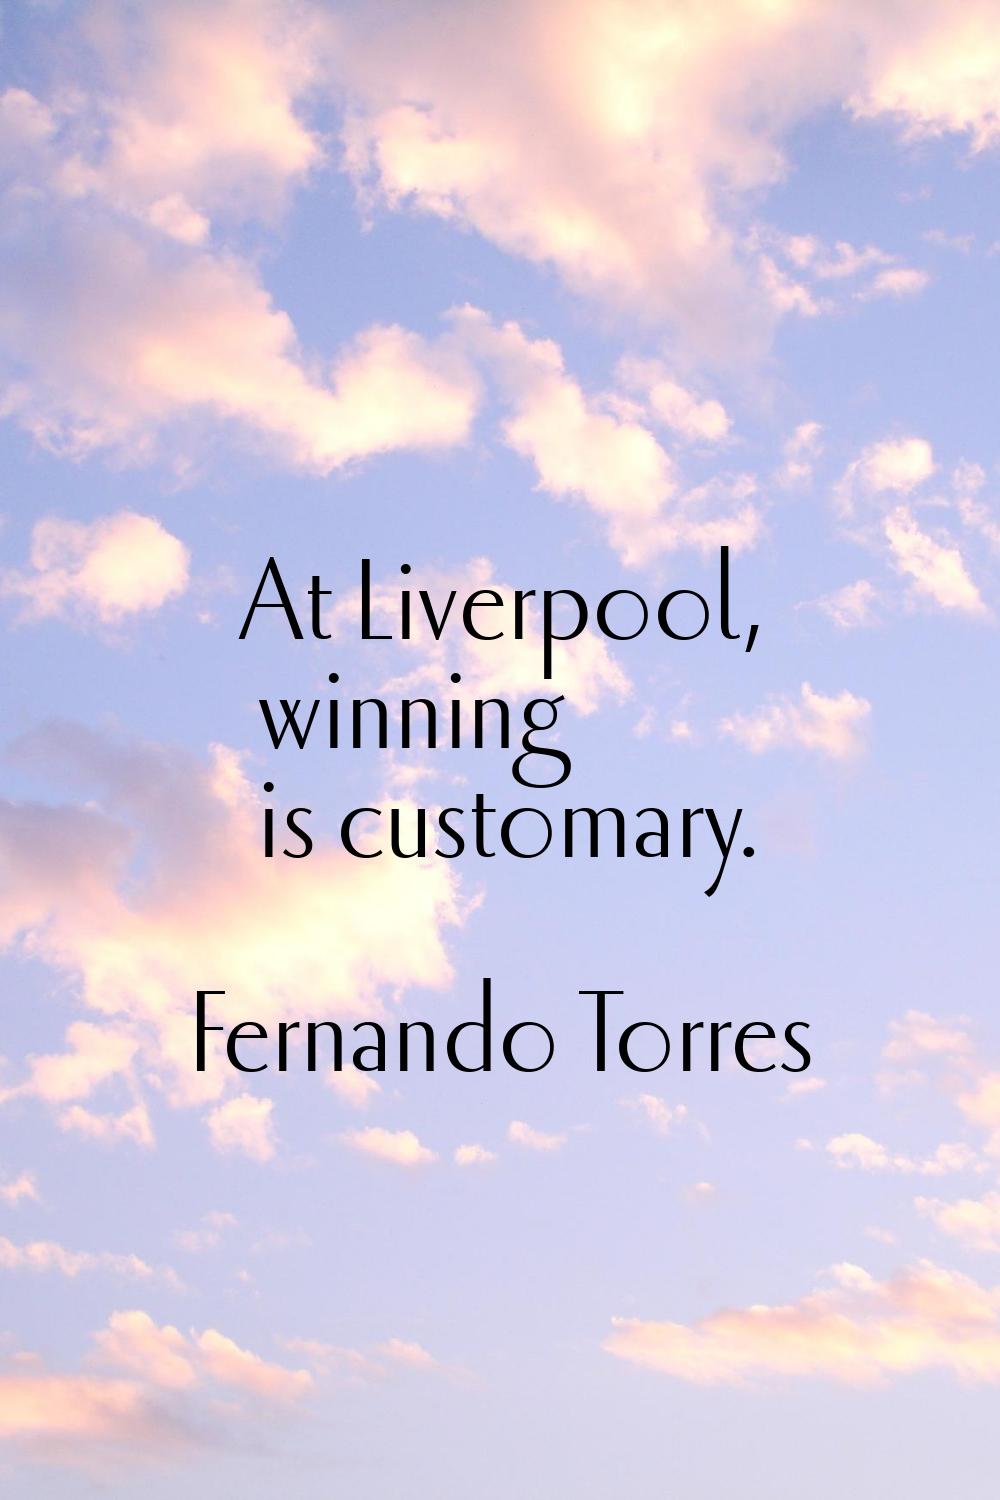 At Liverpool, winning is customary.